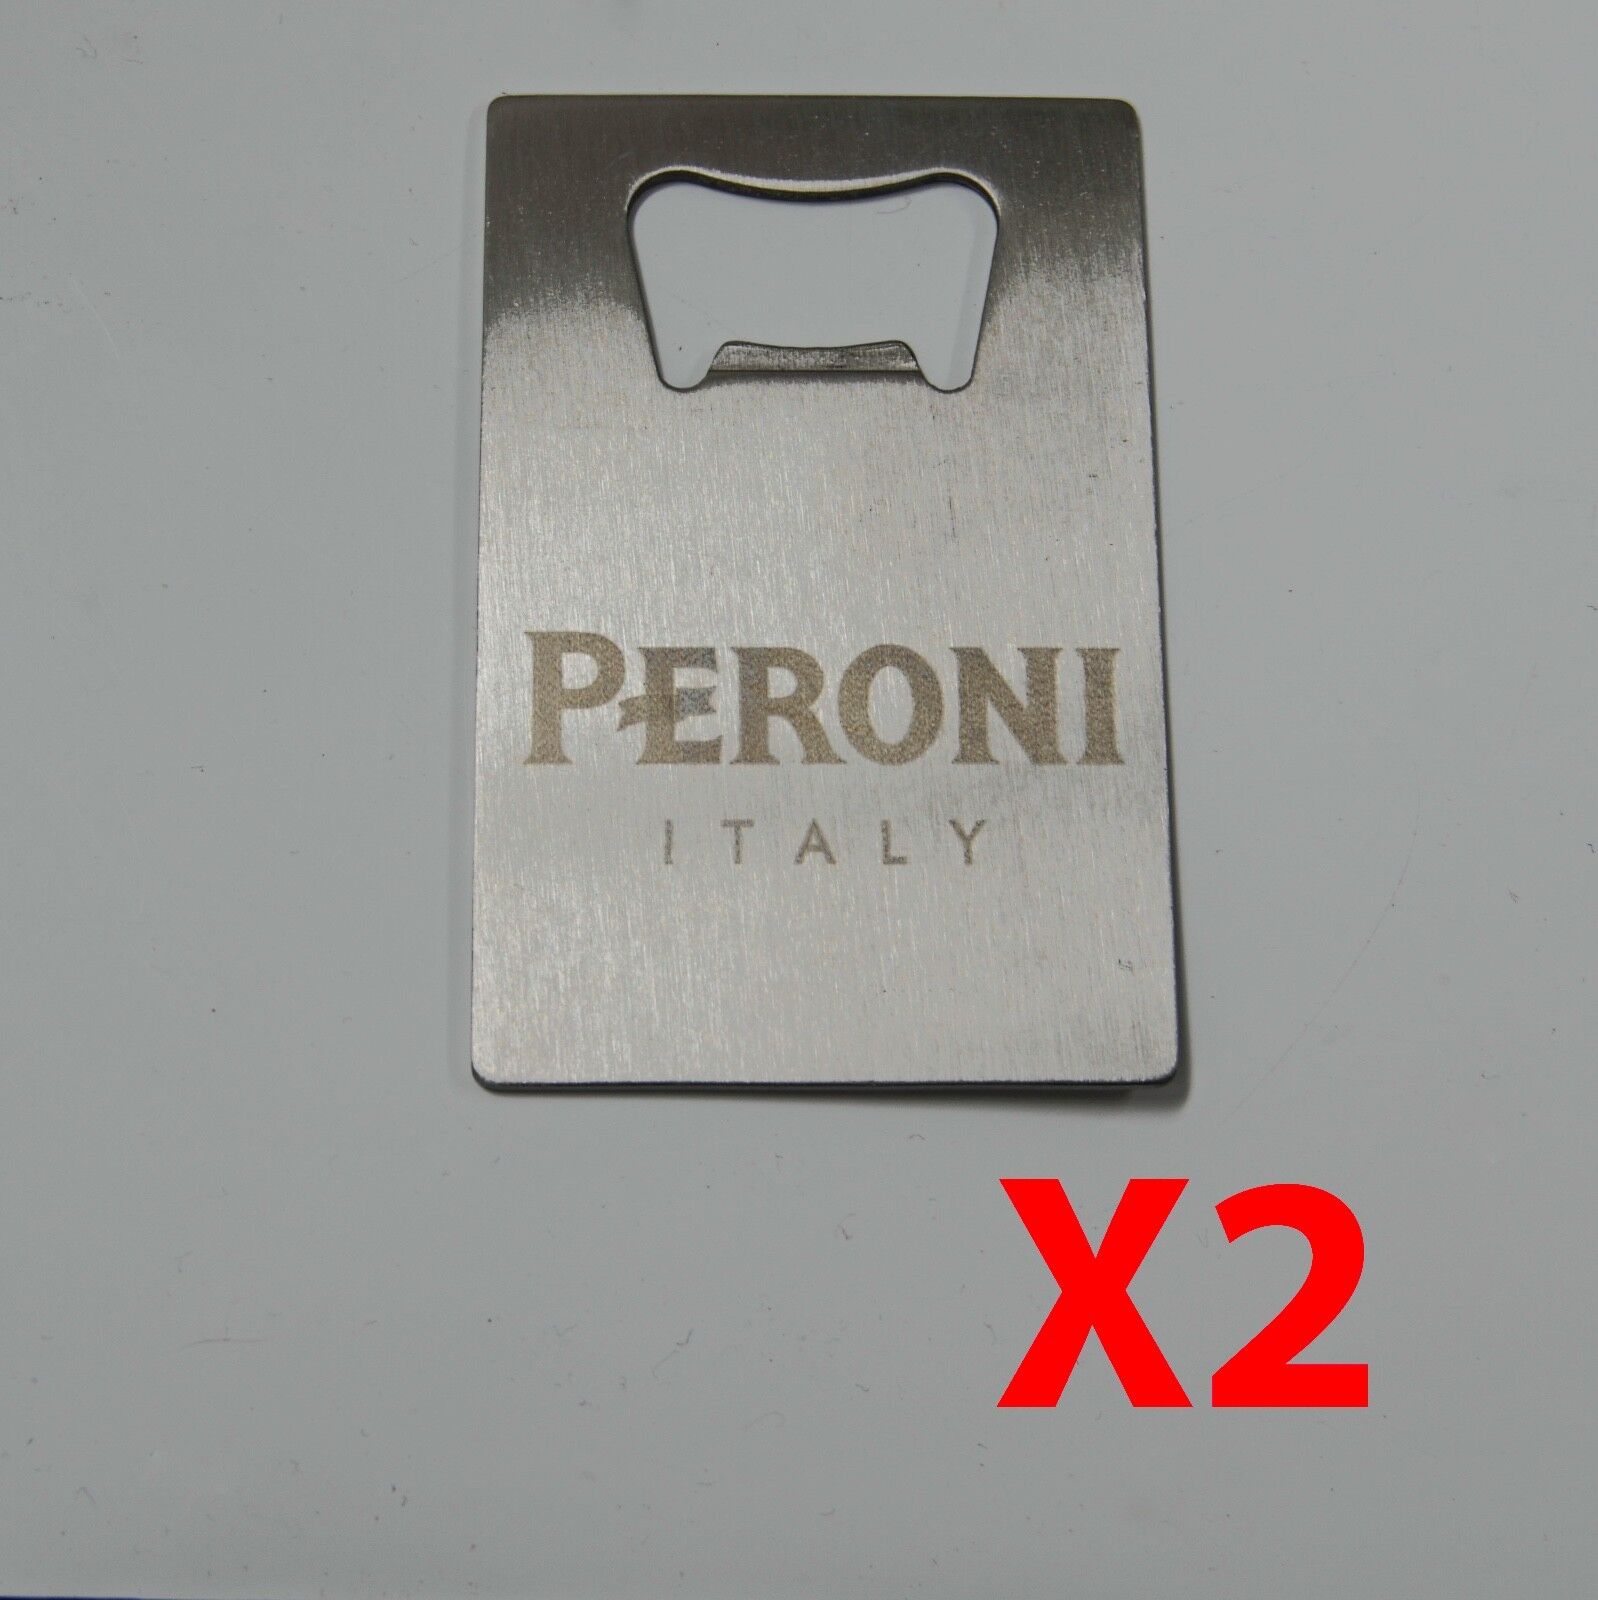 x2 Peroni Nastro Azzuro Credit Card Bottle Opener Beer Bottle Stainless Steel